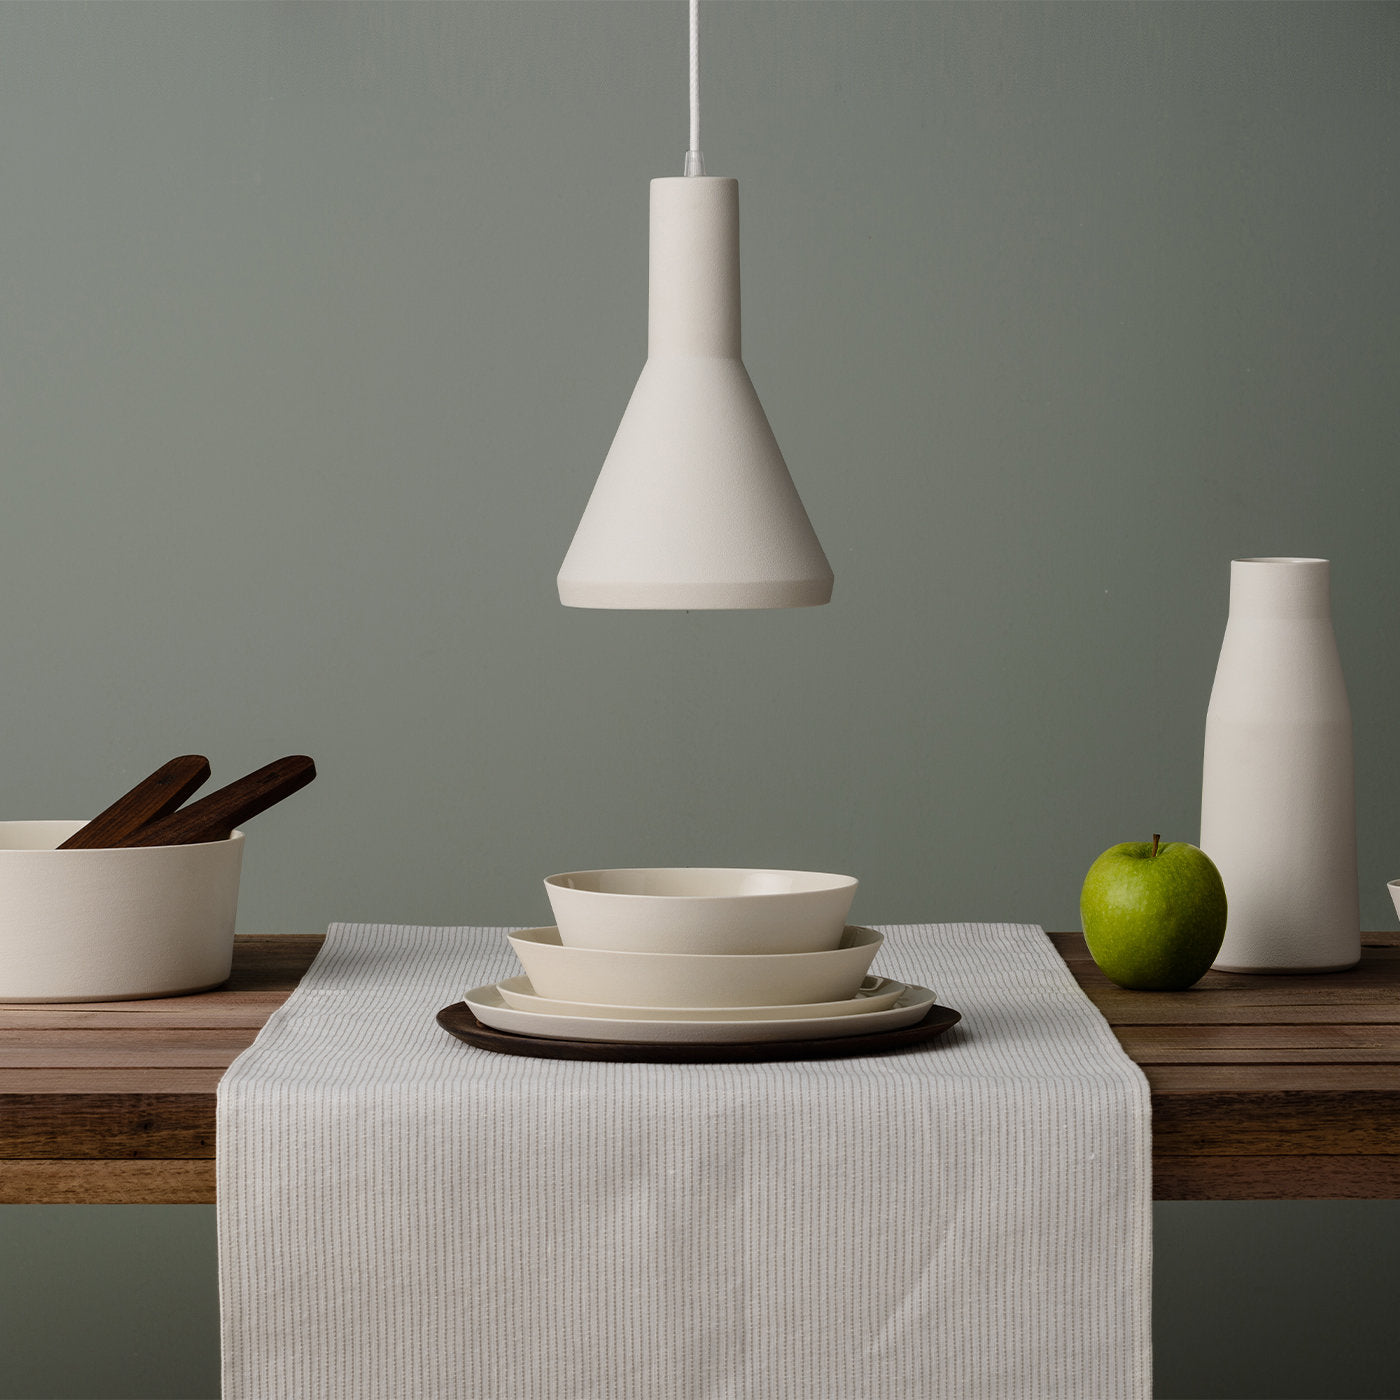 Set of 6 White Ceramic Soup Bowls - Alternative view 1